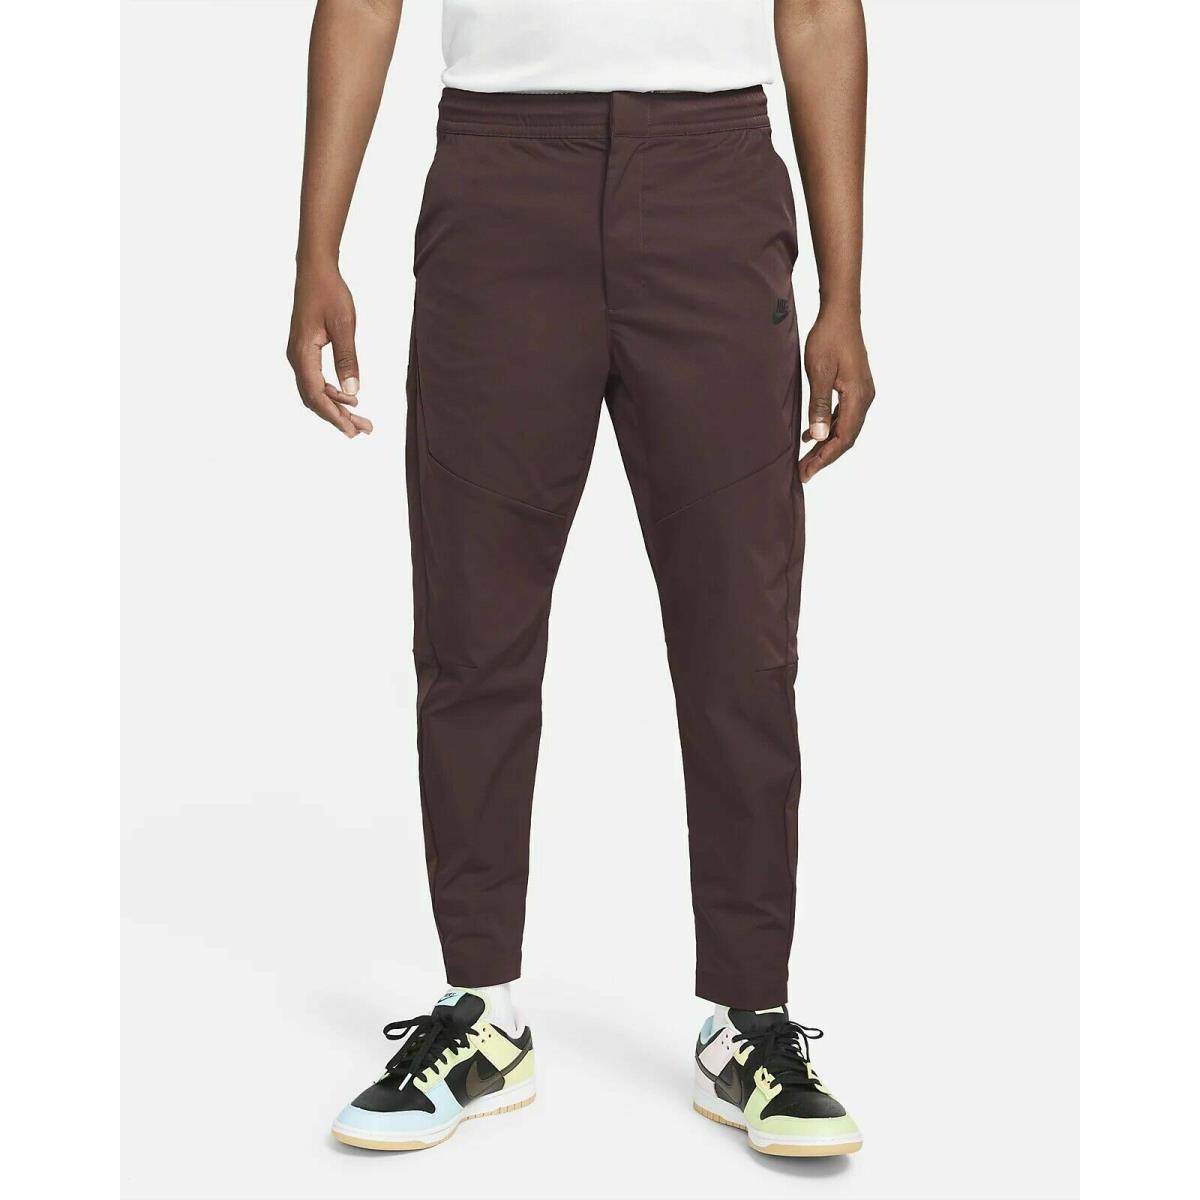 Nike Sportswear Tech Essentials Pants Size XL Tapered Leg Brown DH4224 203